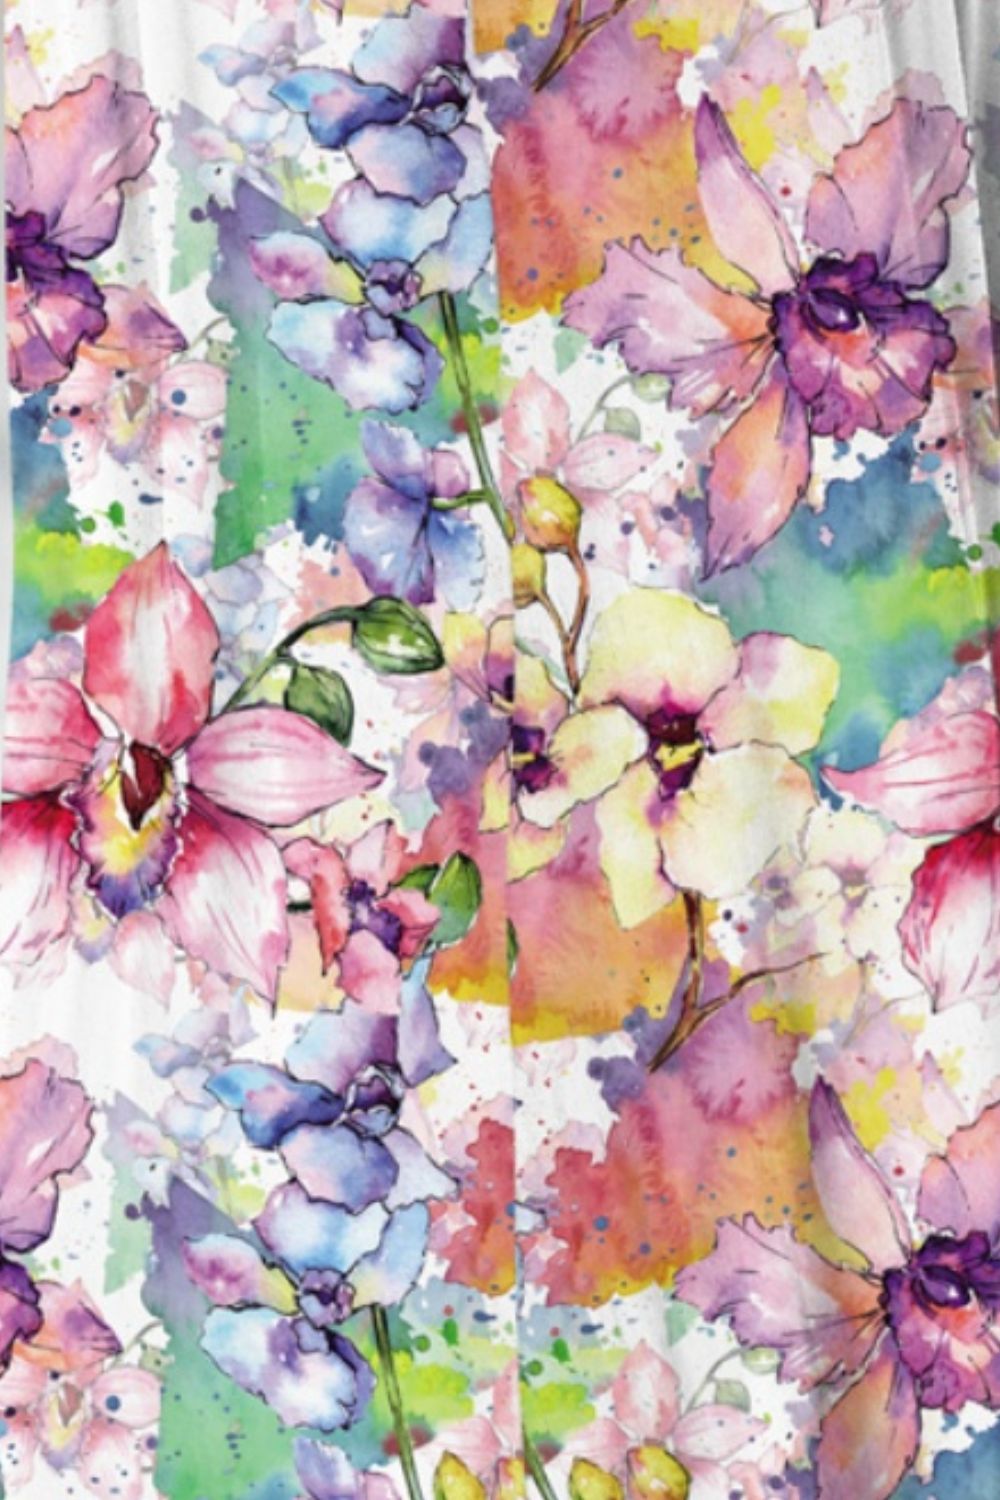 Watercolors Floral Maxi Skirt